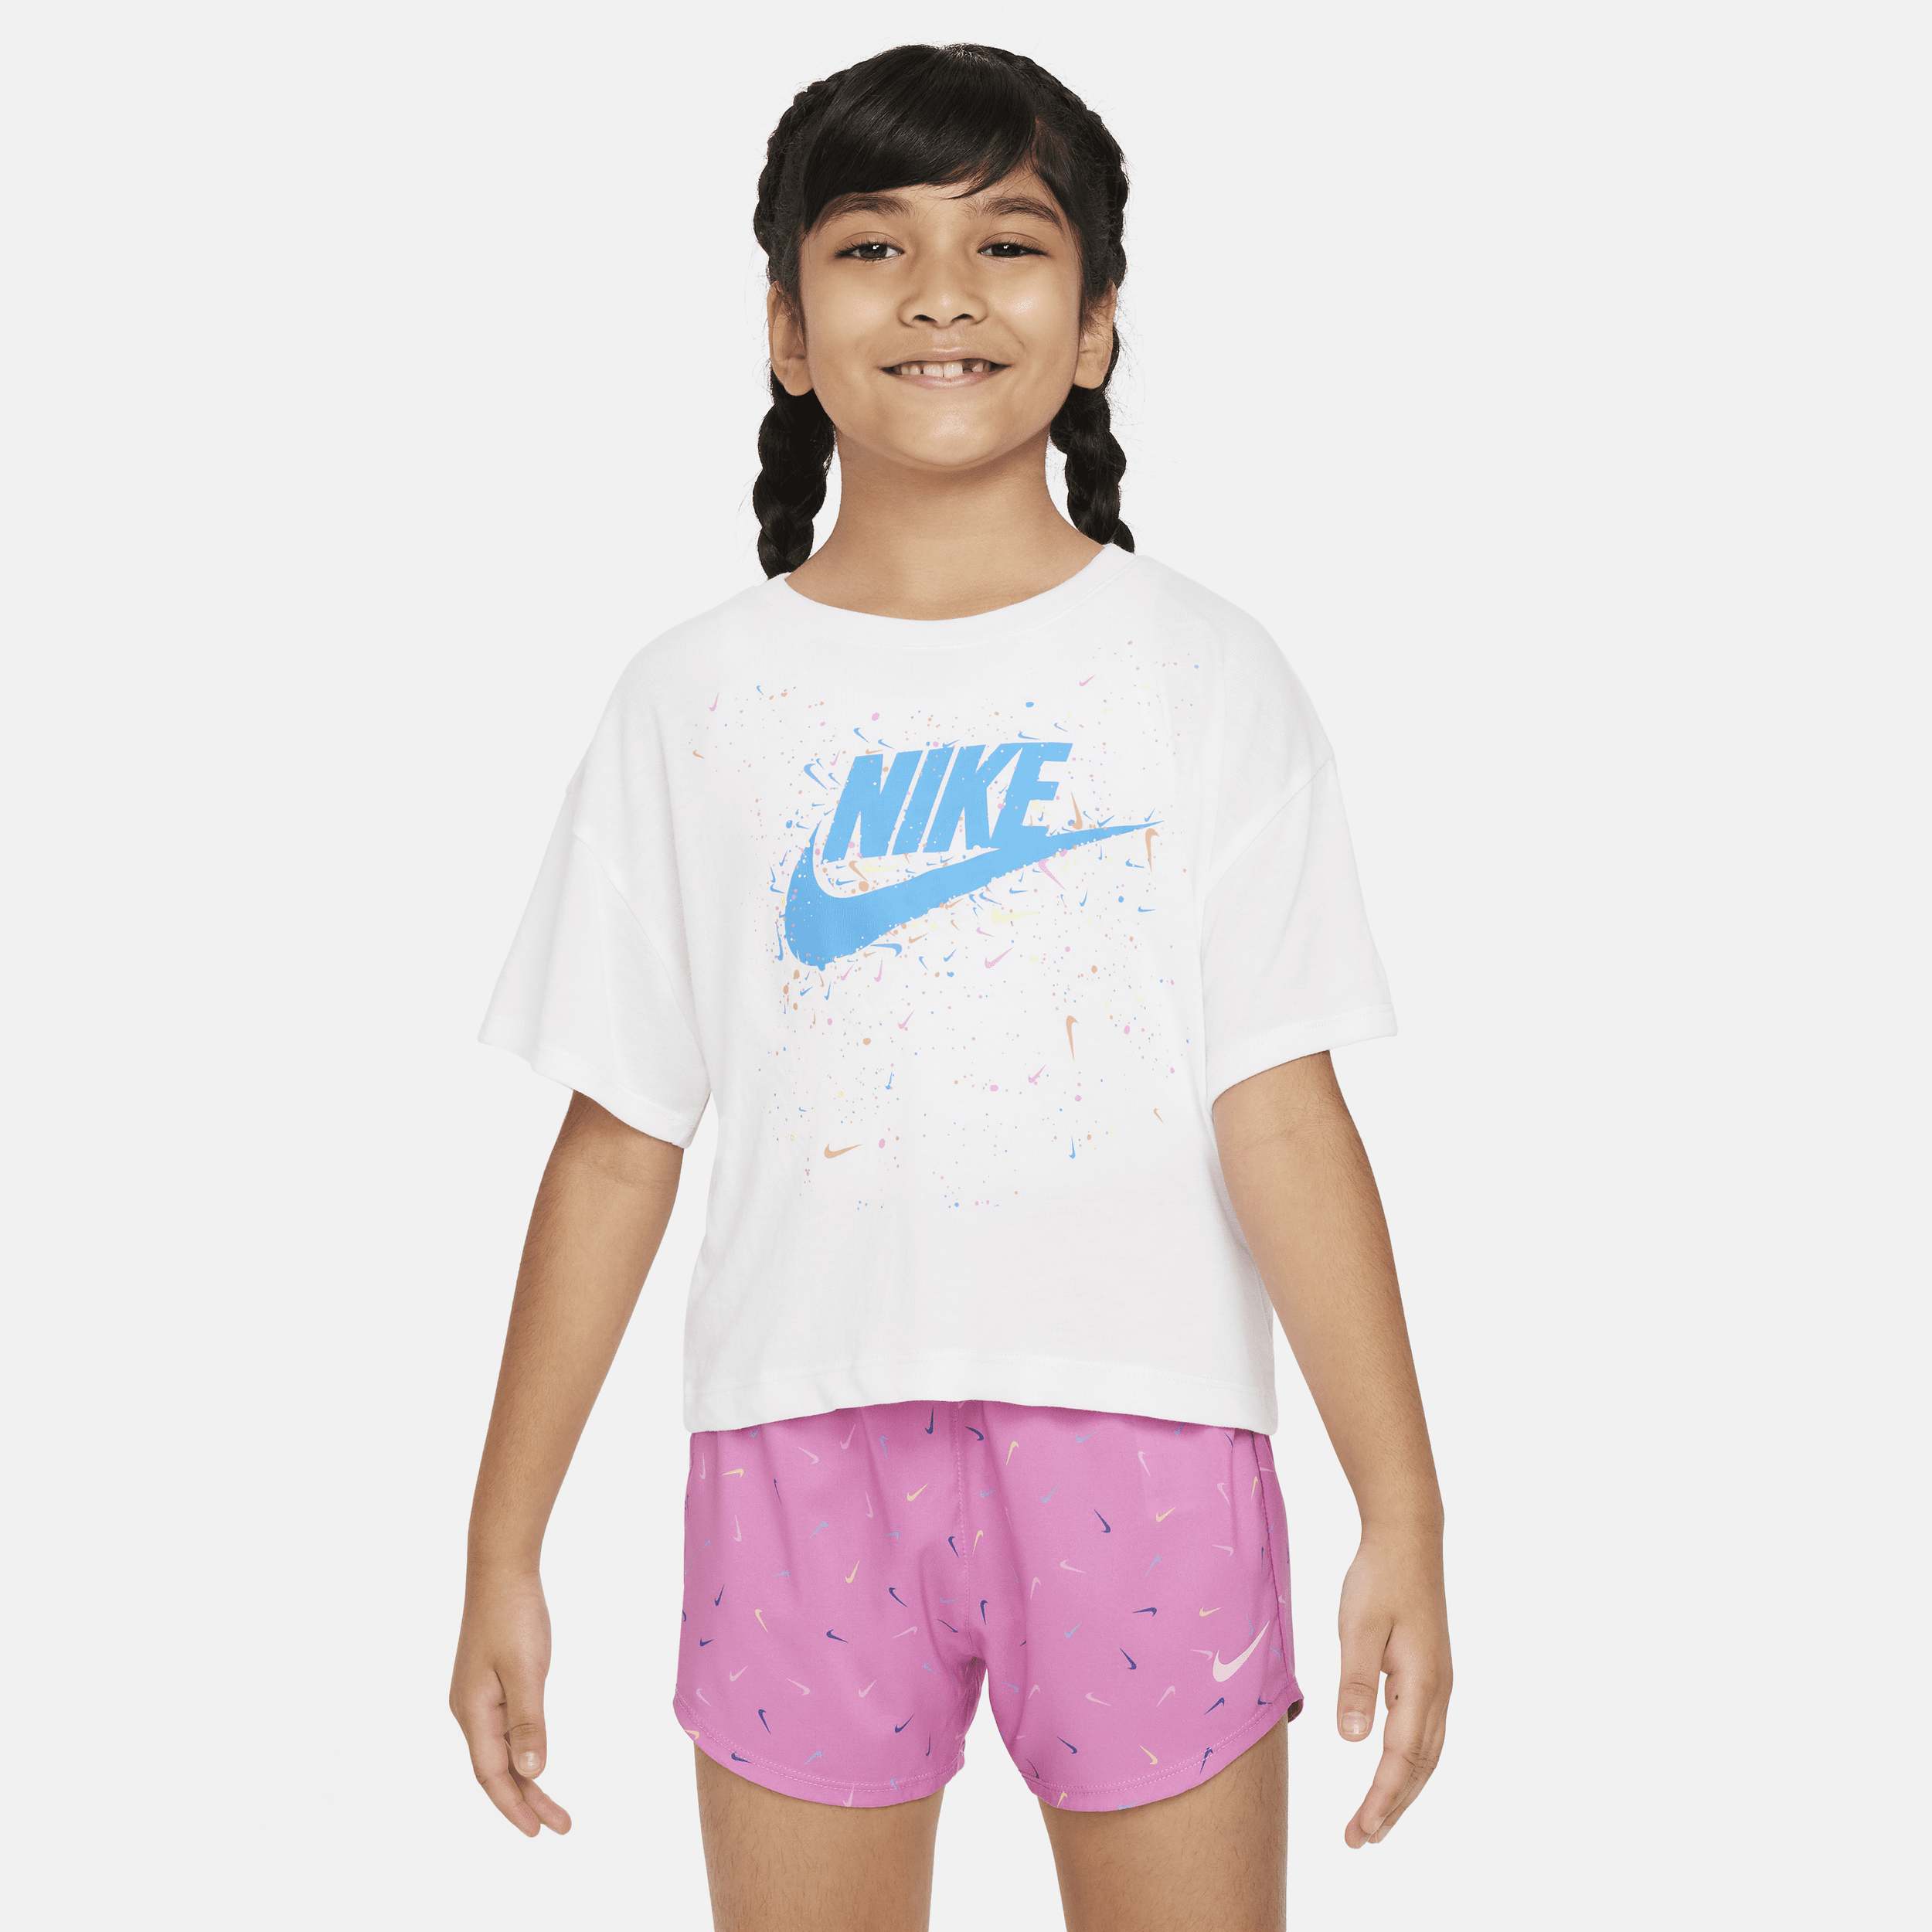 Nike Camiseta - Niño/a pequeño/a - Blanco